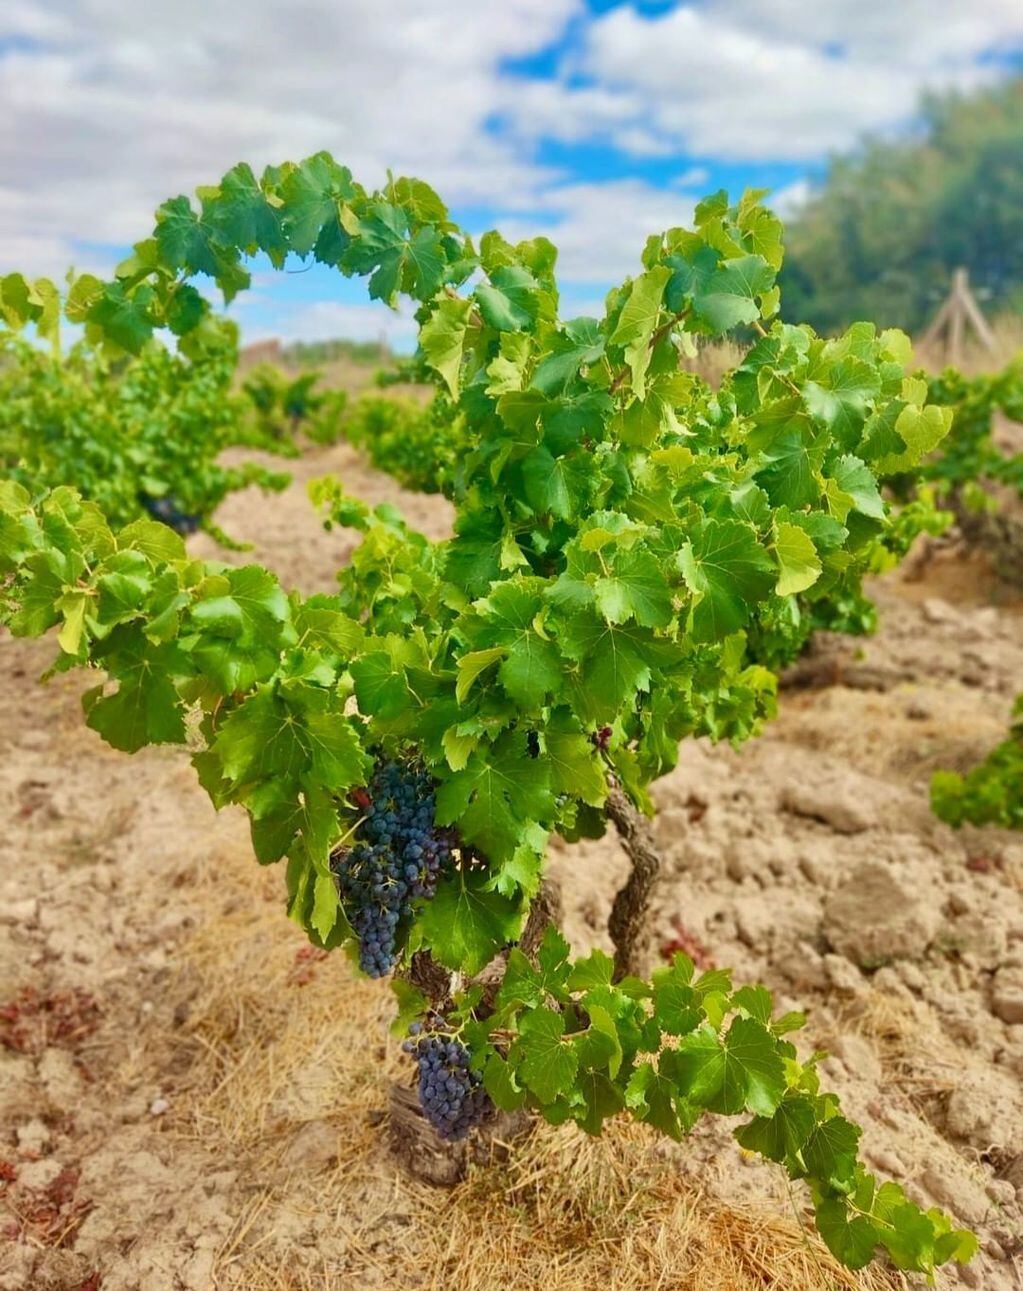 Se conoce a la uva como Giró, Gironet, Lladoner, Garnacho, Garnatxo, Vernassa y Garnacha negra. -Imagen web